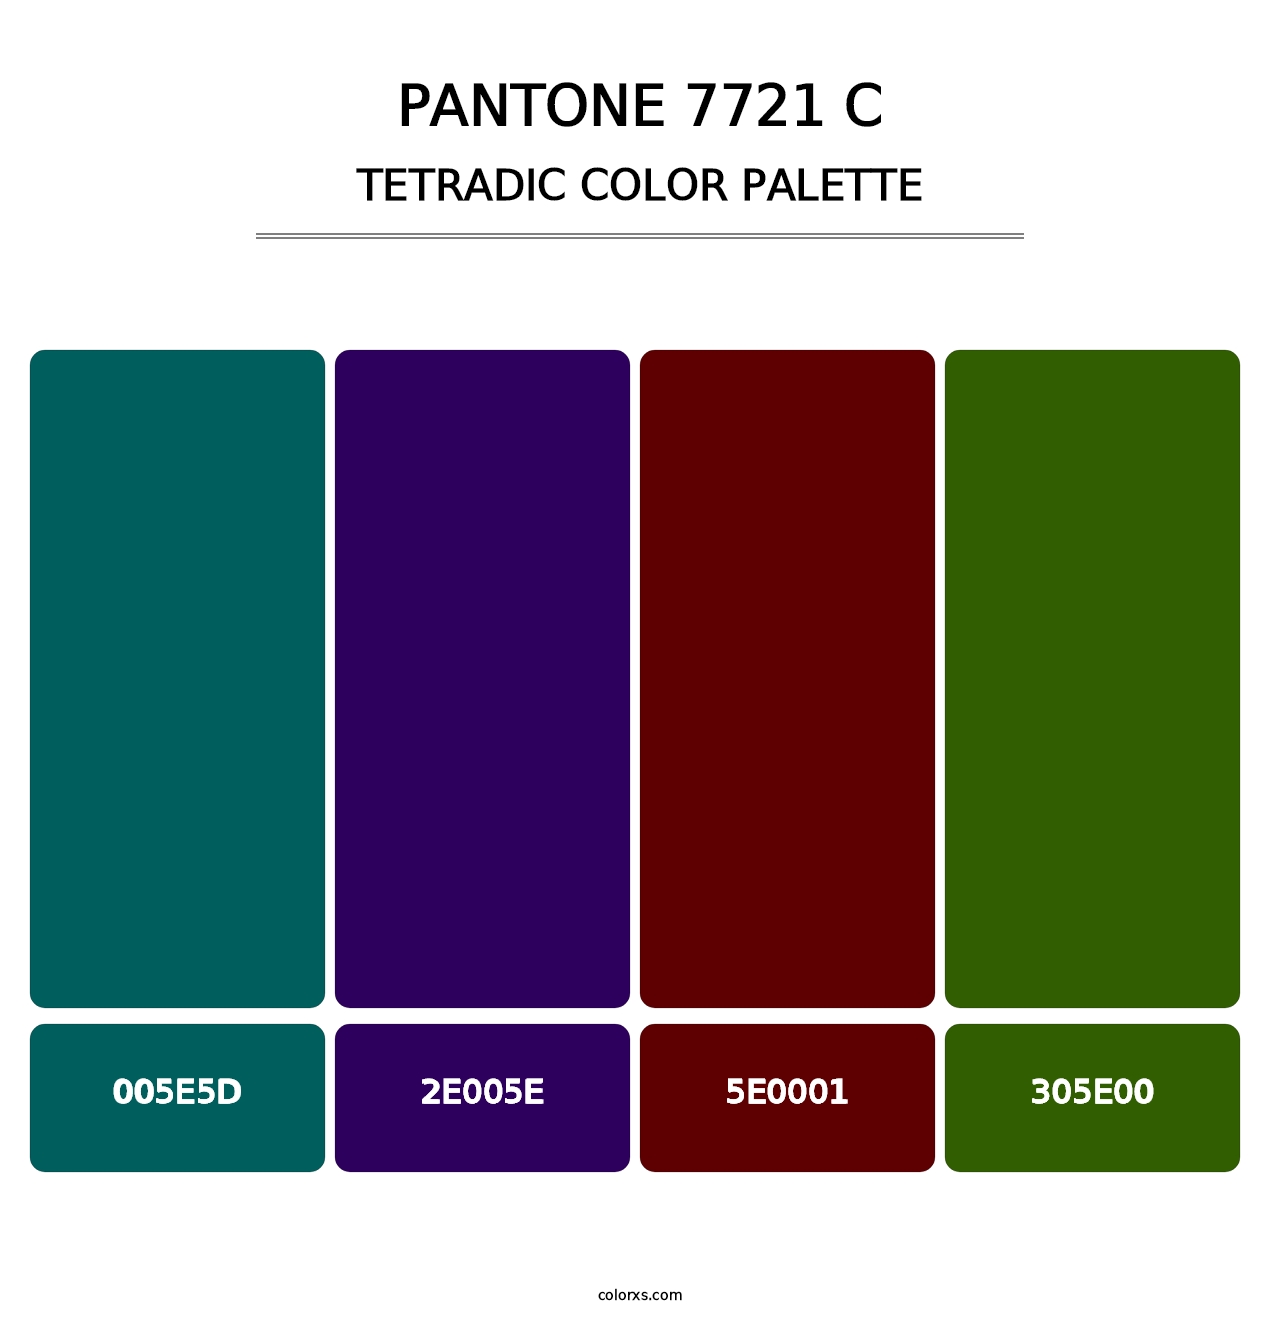 PANTONE 7721 C - Tetradic Color Palette